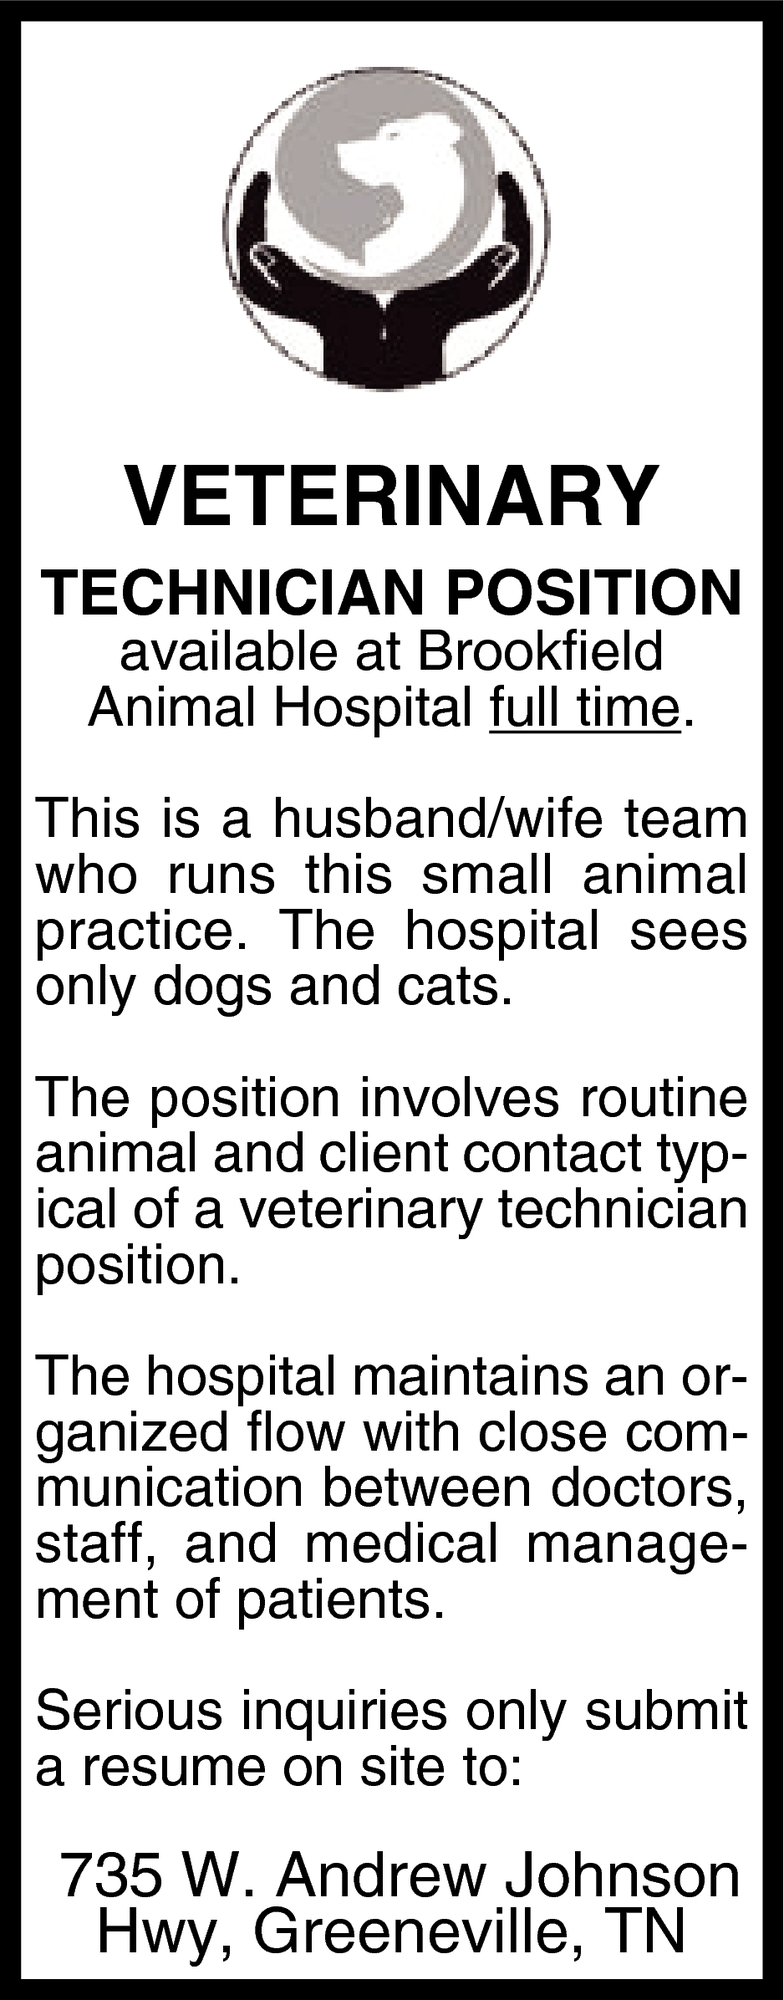 Veterinary Technician Position, 735 W. Andrew Johnson Hwy, Greeneville TN